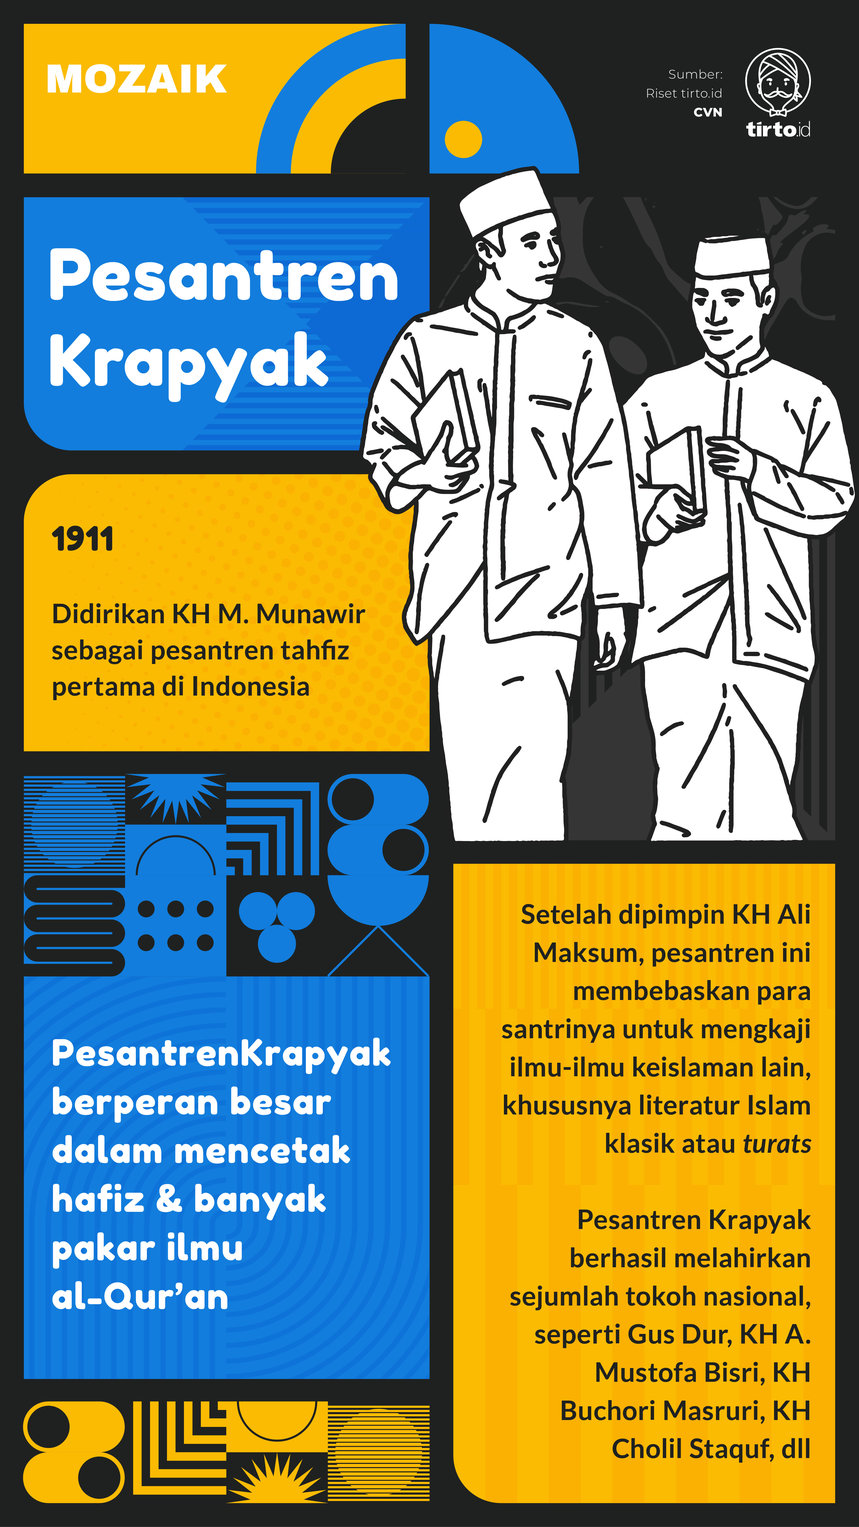 Infografik Mozaik Pesantren Krapyak